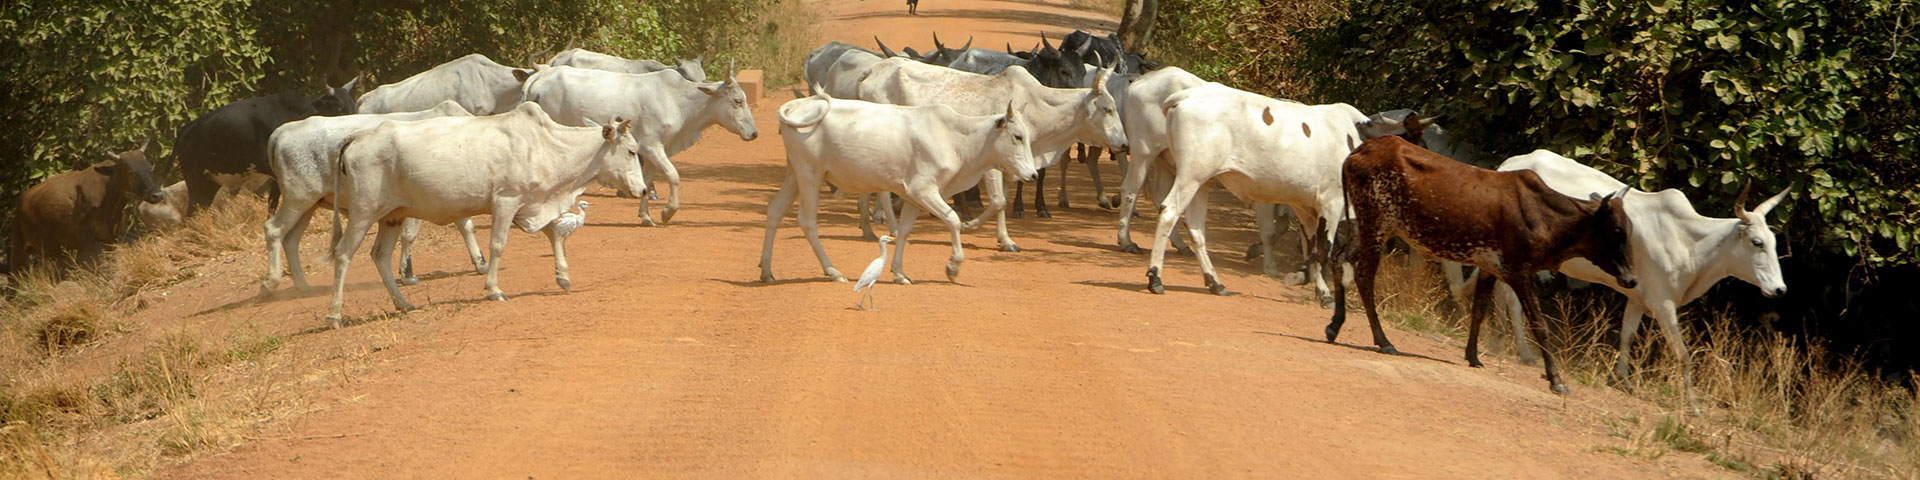 A herd of cattle crossing a sandy road.